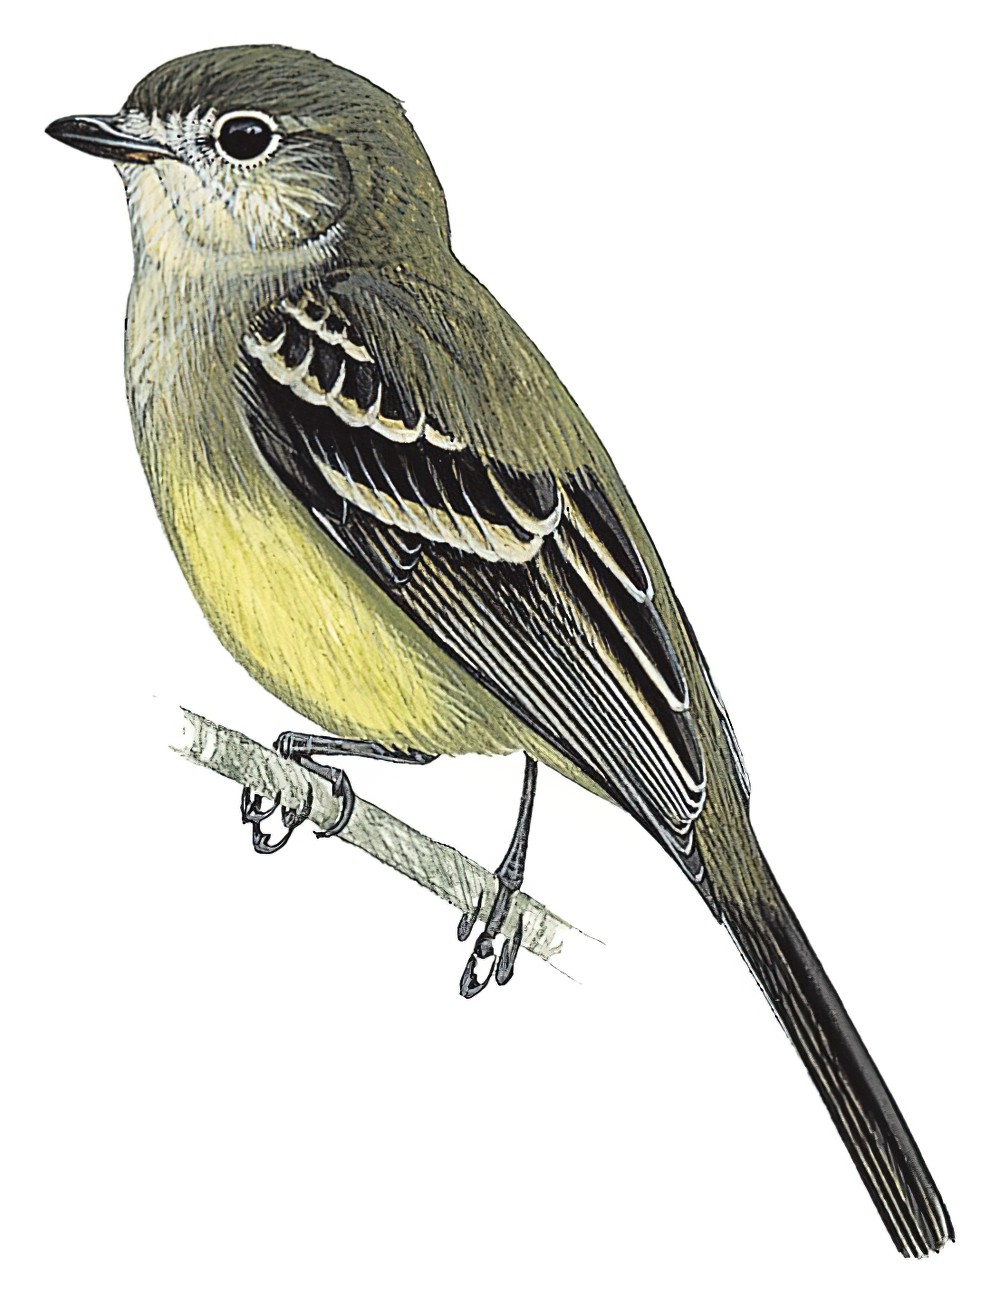 Amazonian Scrub-Flycatcher / Sublegatus obscurior